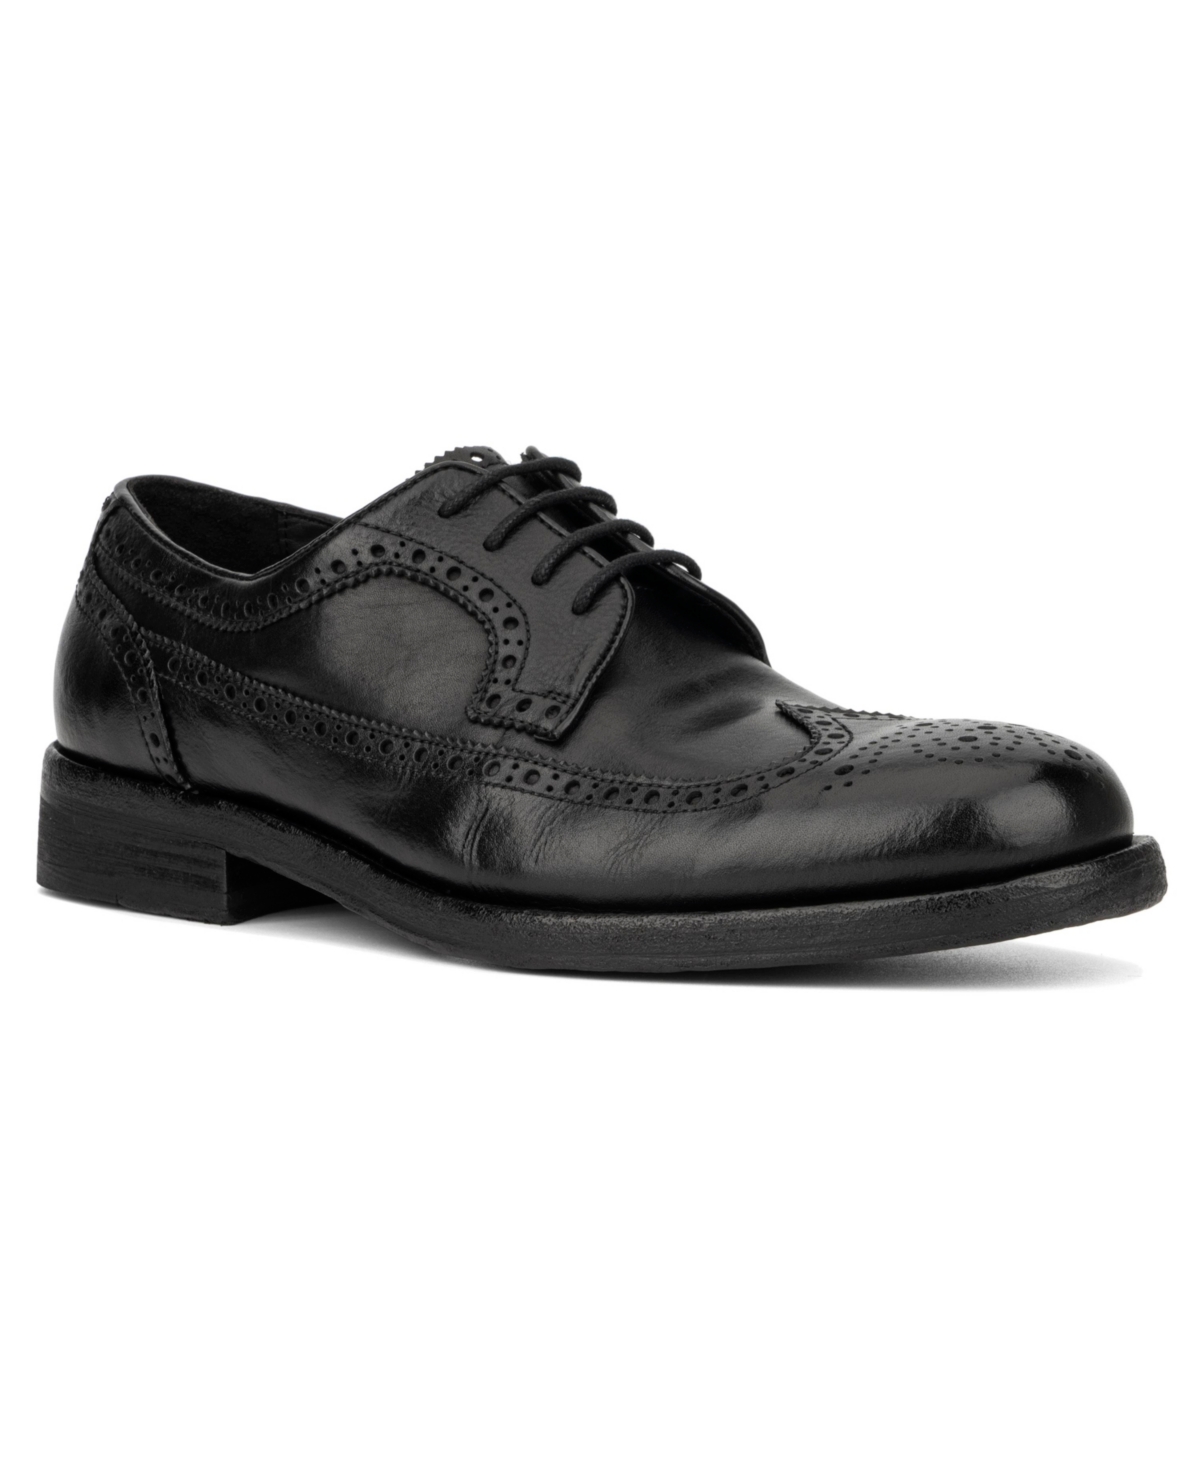 Vintage Foundry Co Men's Ellis Oxford Shoes In Black